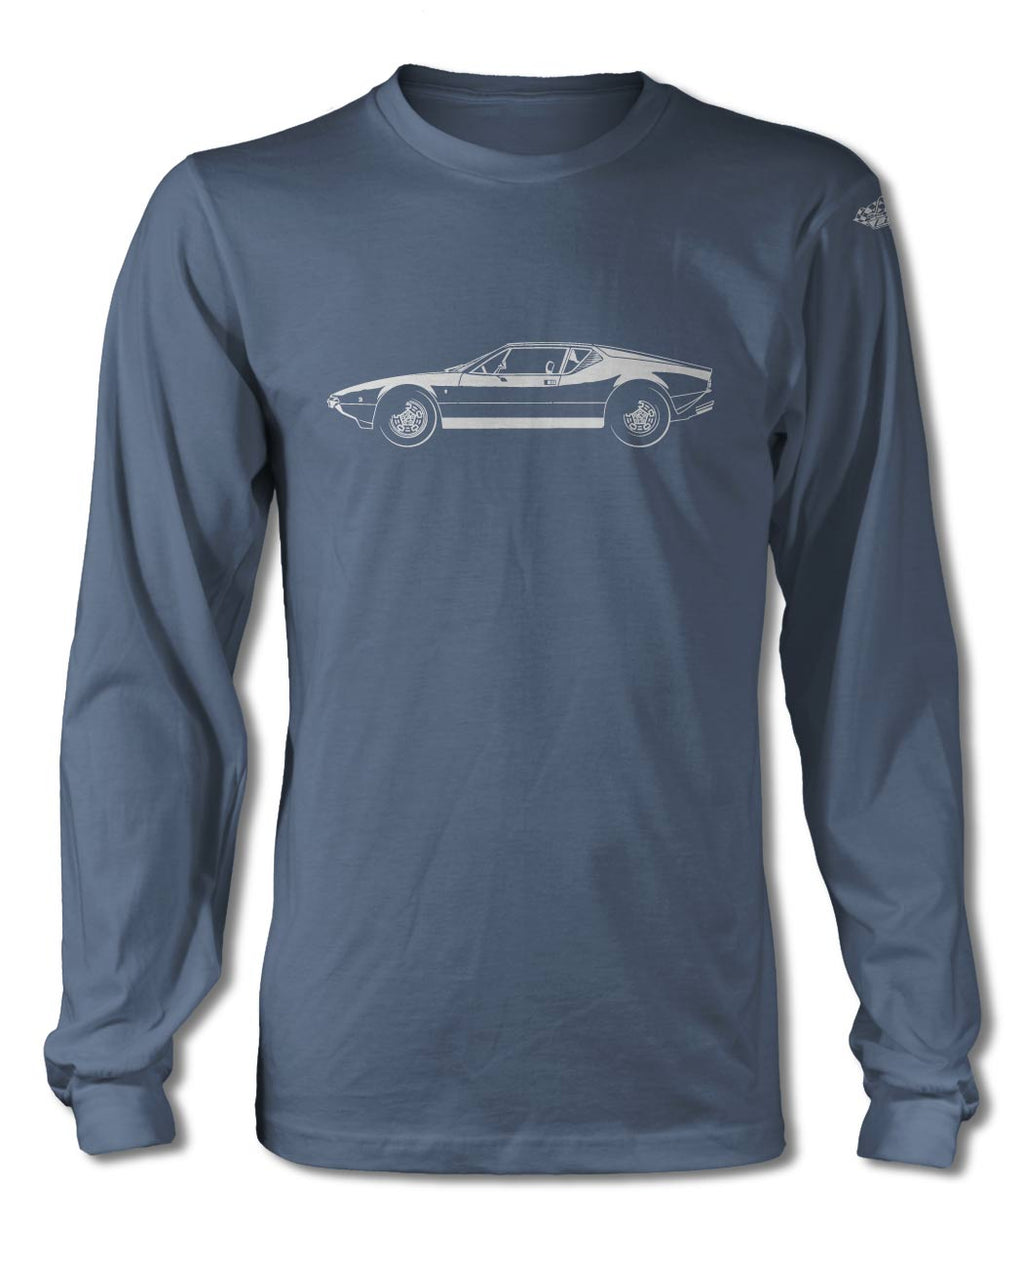 De Tomaso Pantera T-Shirt - Long Sleeves - Side View